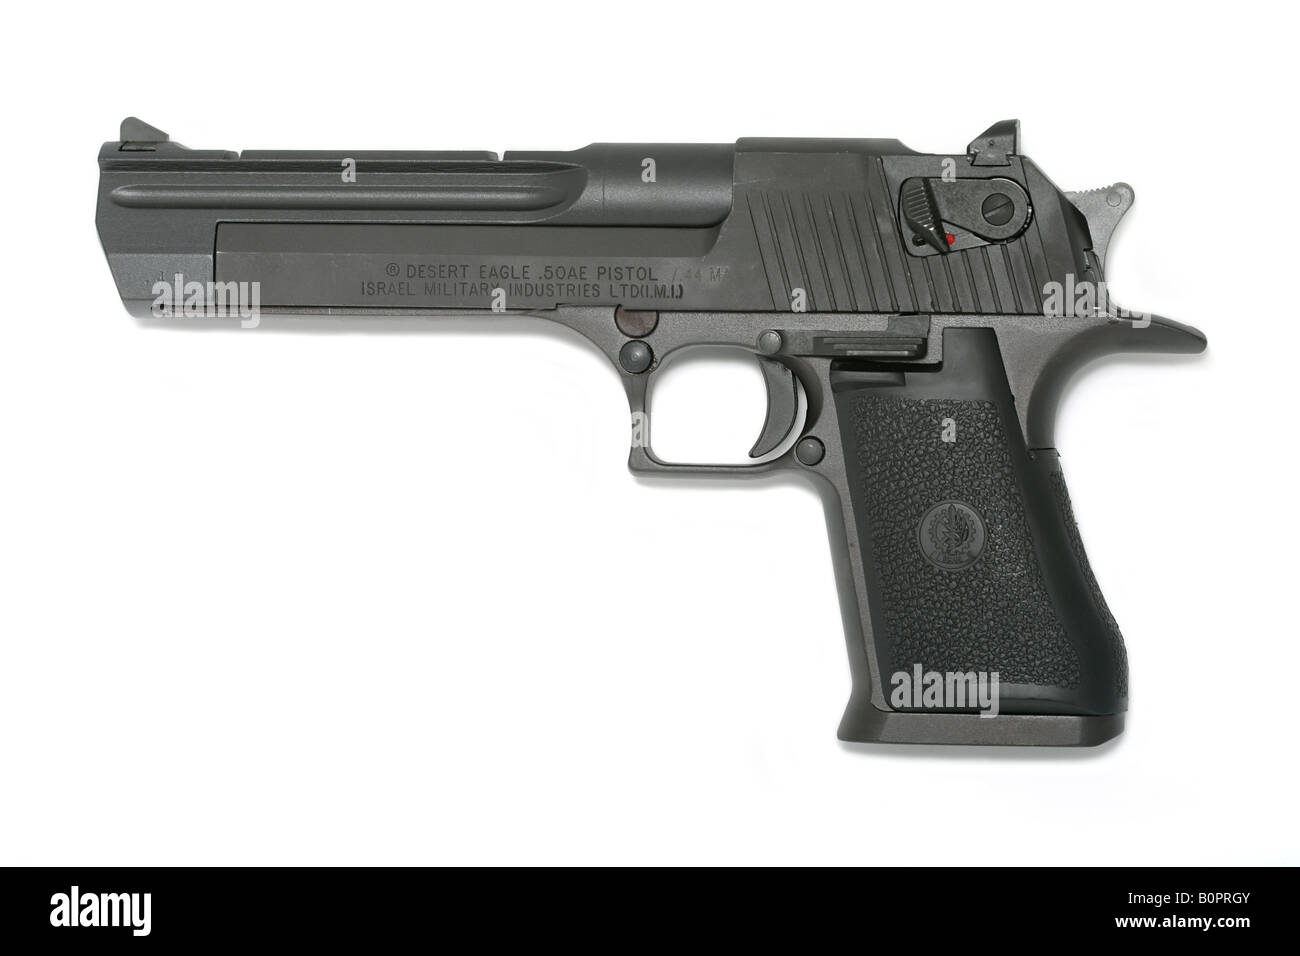 Desert Eagle 44 50 AE Israel Military Industries Ltd pistol handgun hand gun Stock Photo